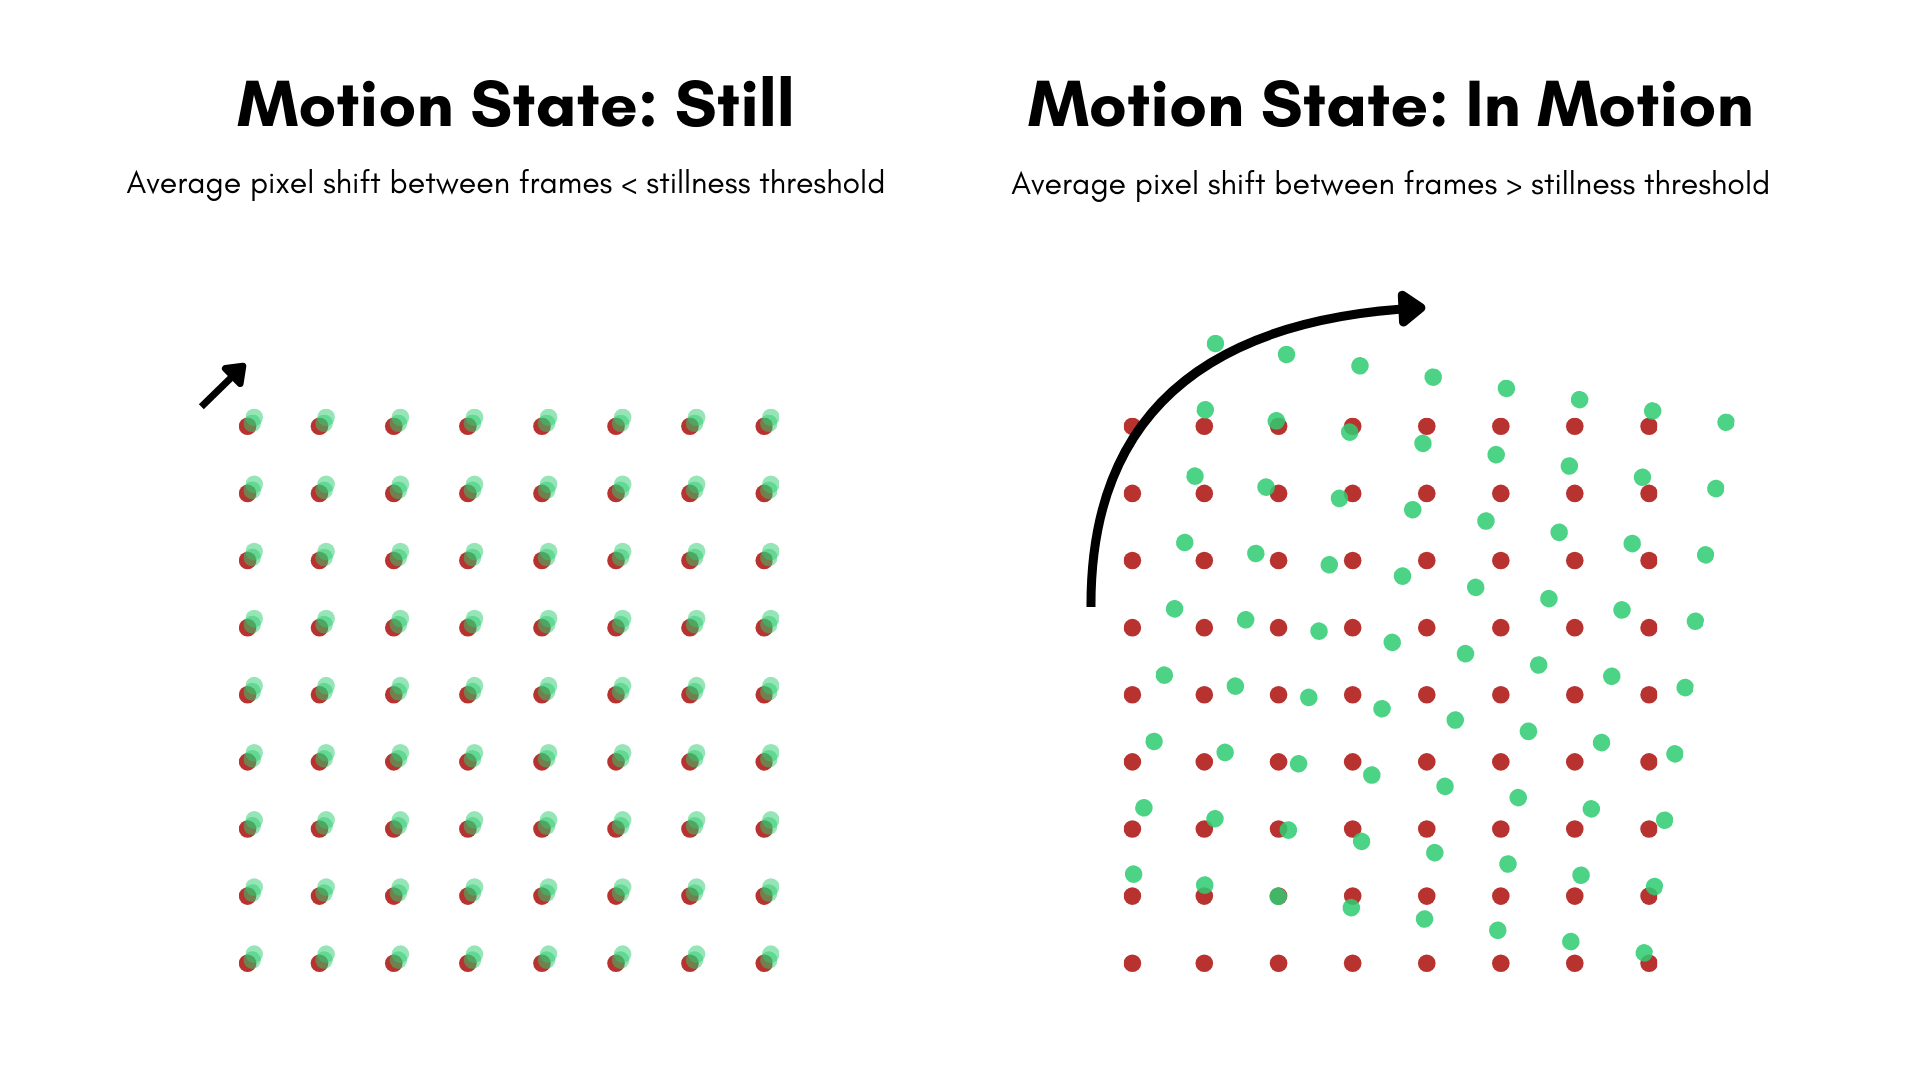 Motion States